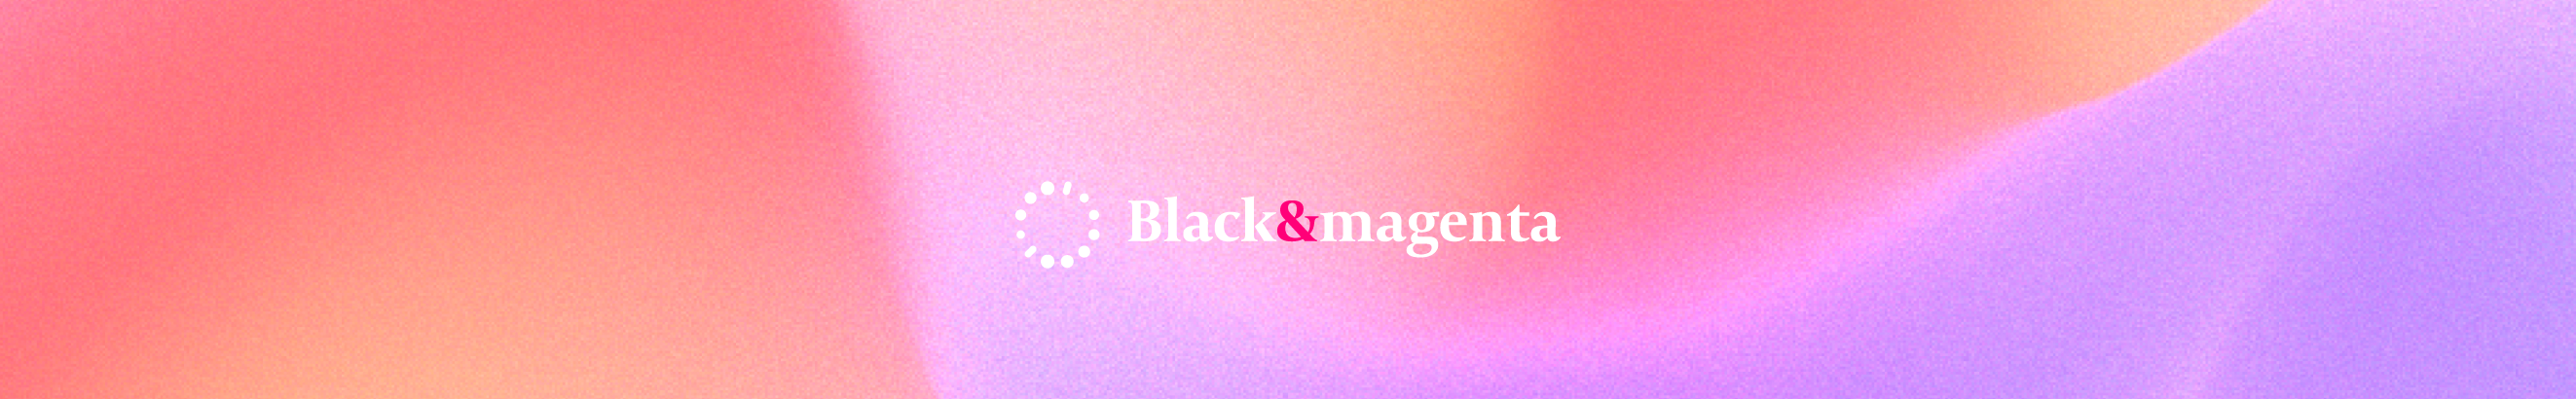 Black Magenta®'s profile banner